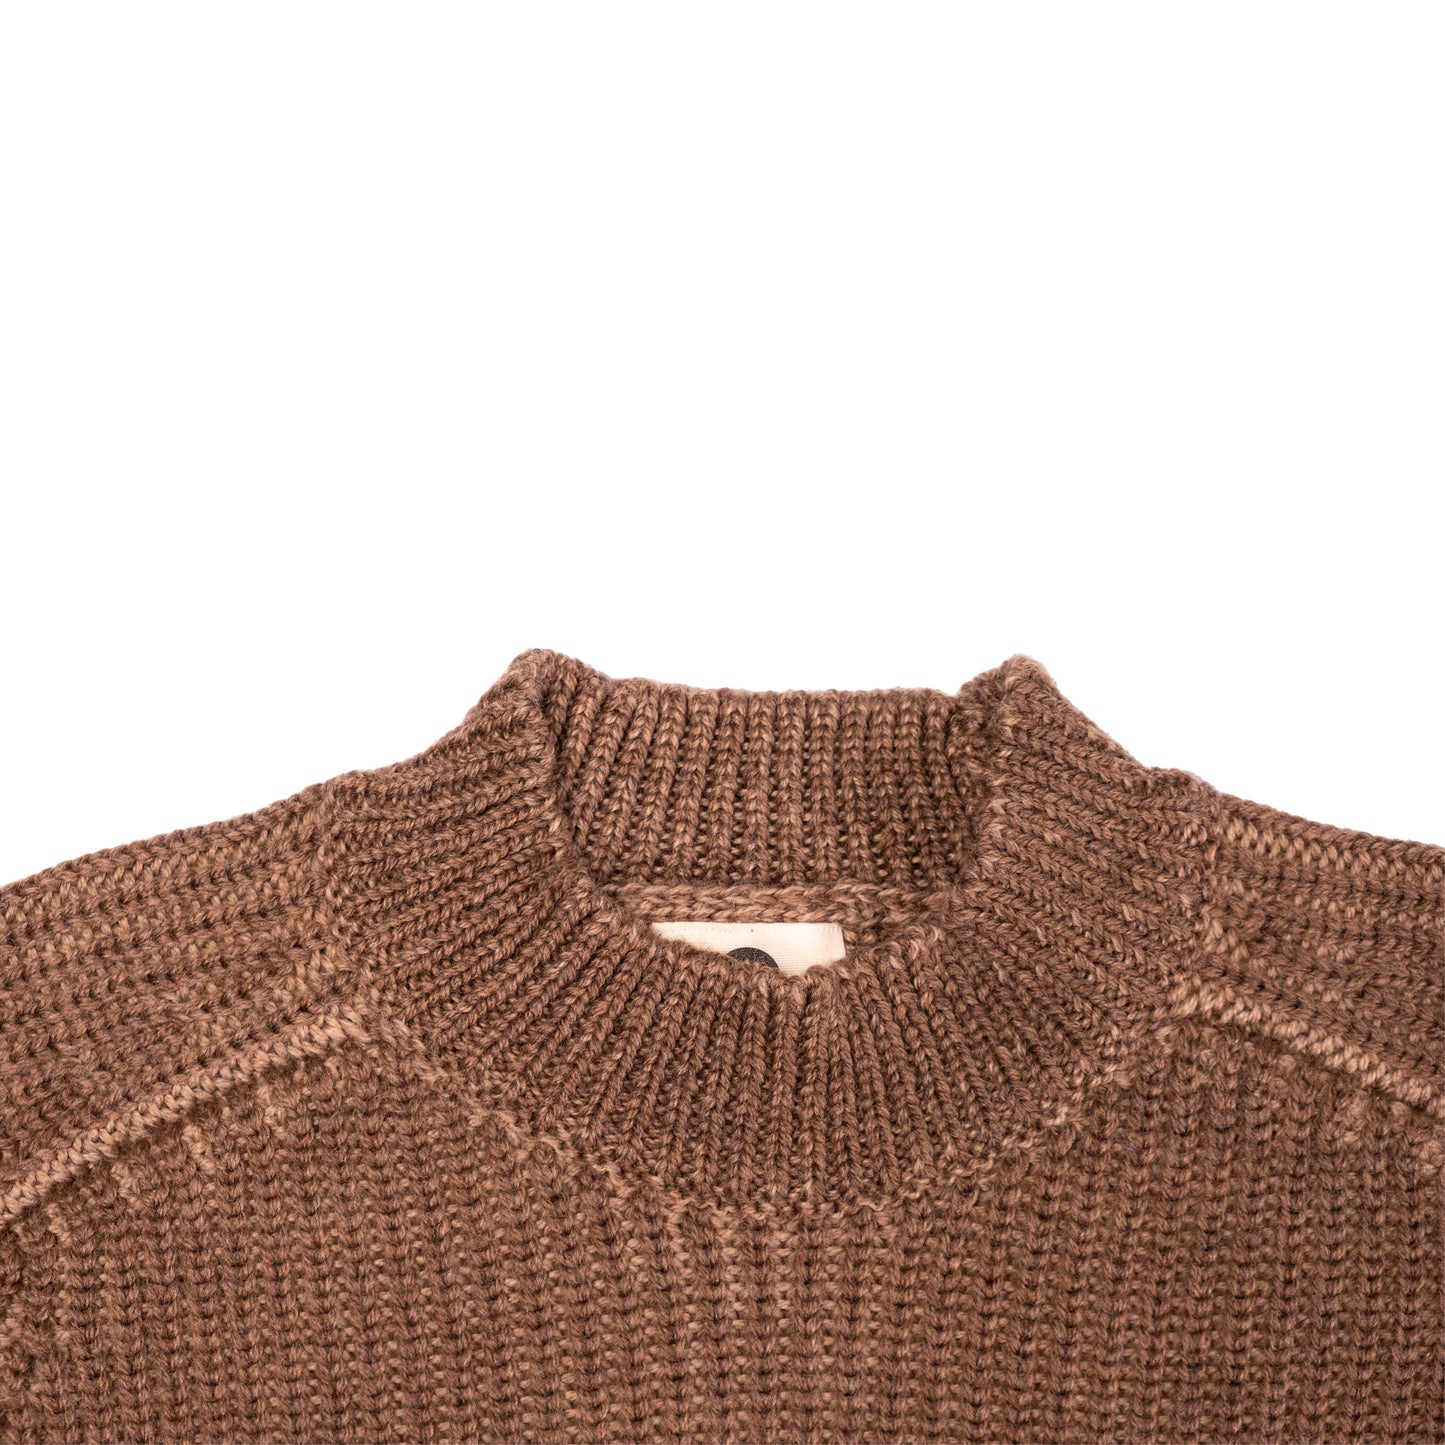 Men's Vista Merino Wool Sweater -  Brown / Tan